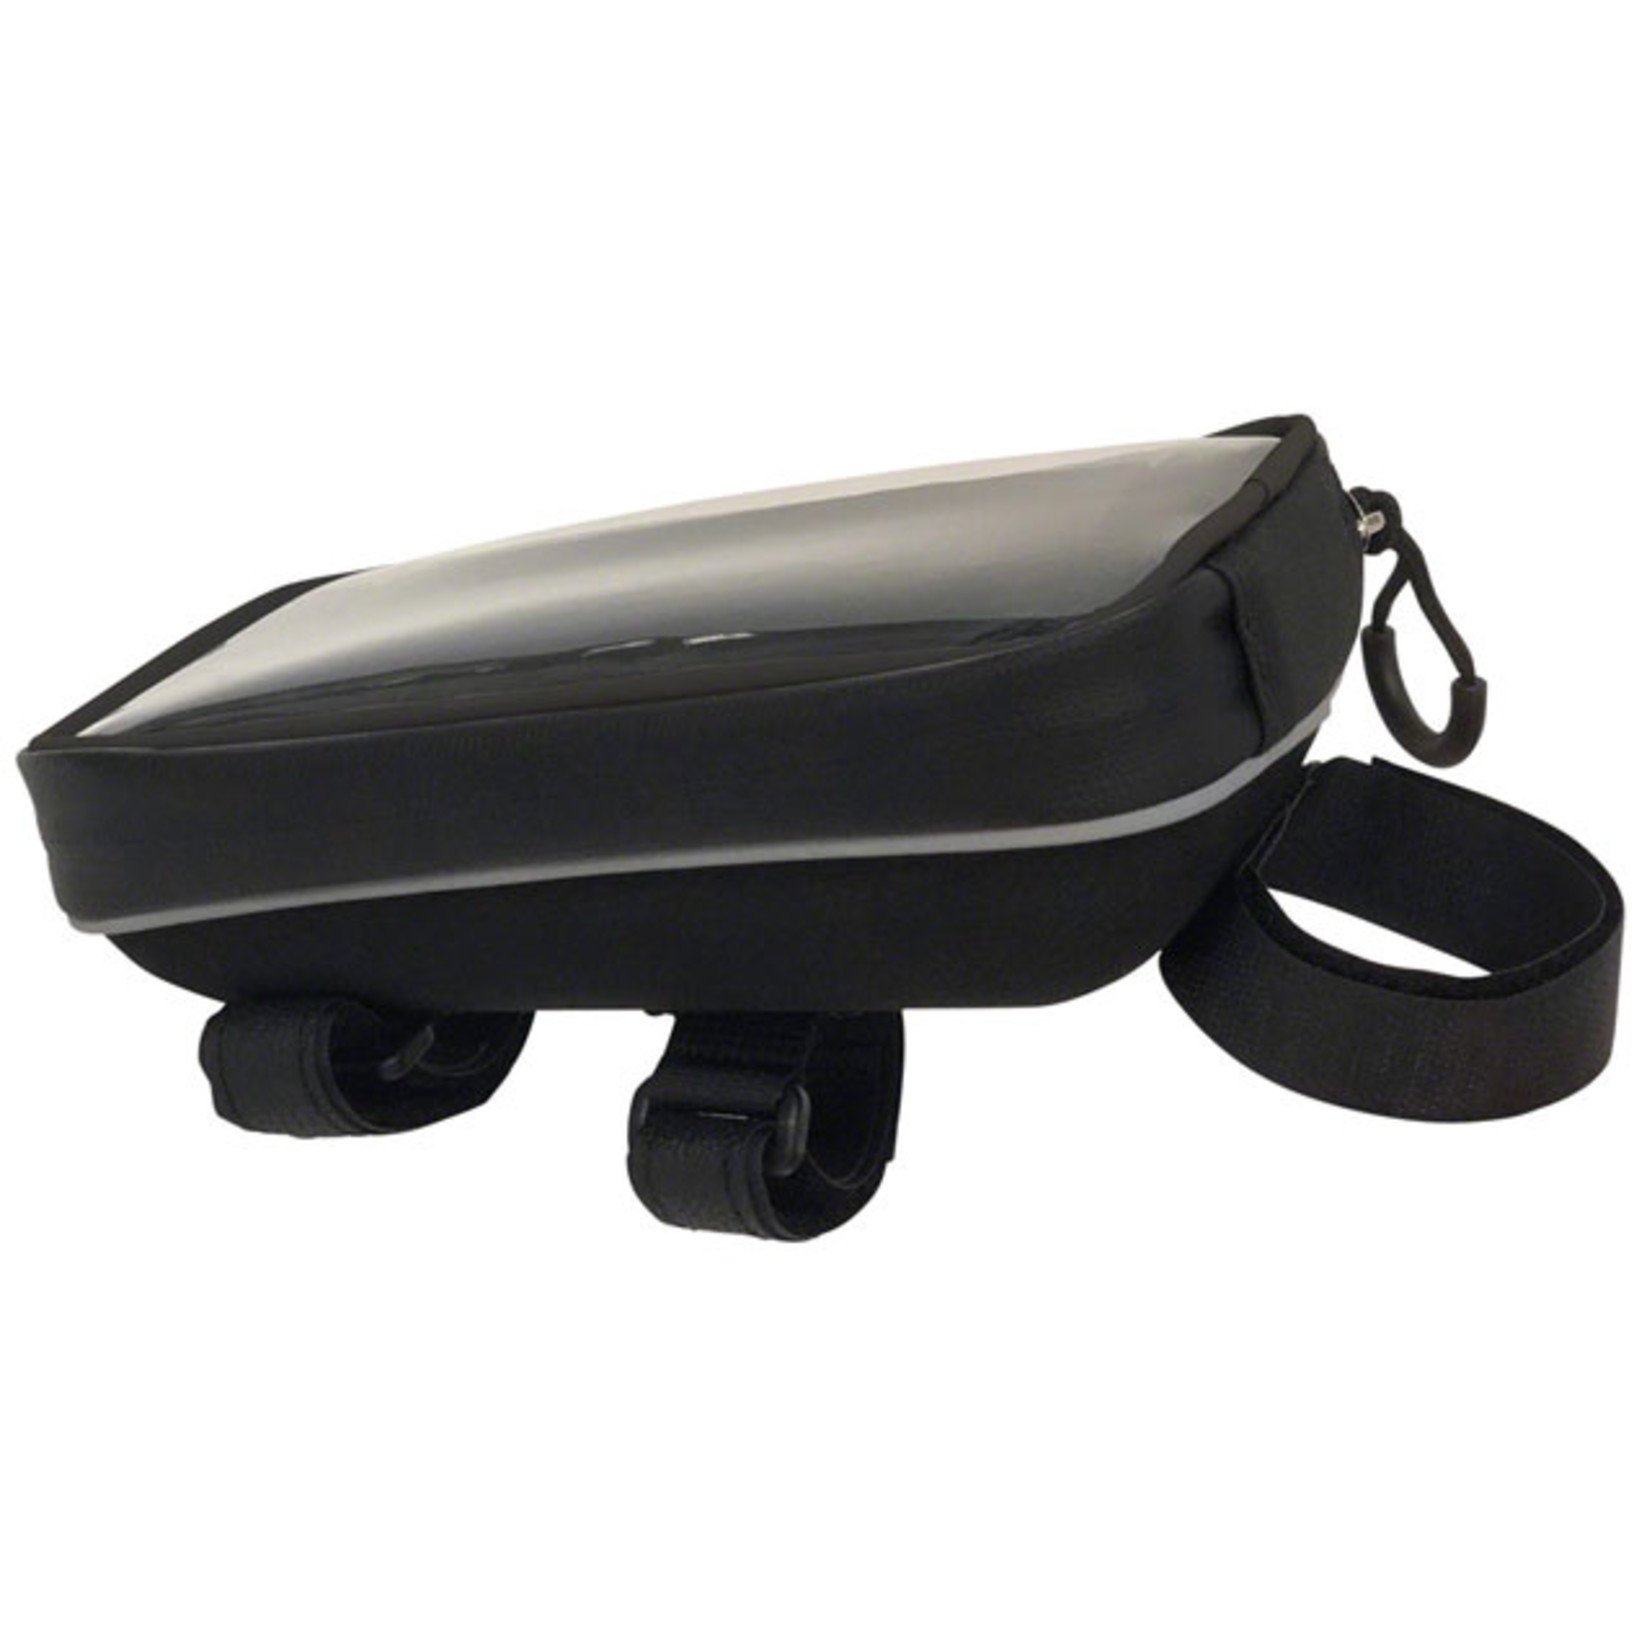 Lezyne Lezyne Smart Energy Caddy XL Top Tube Mount Phone Holder - Black